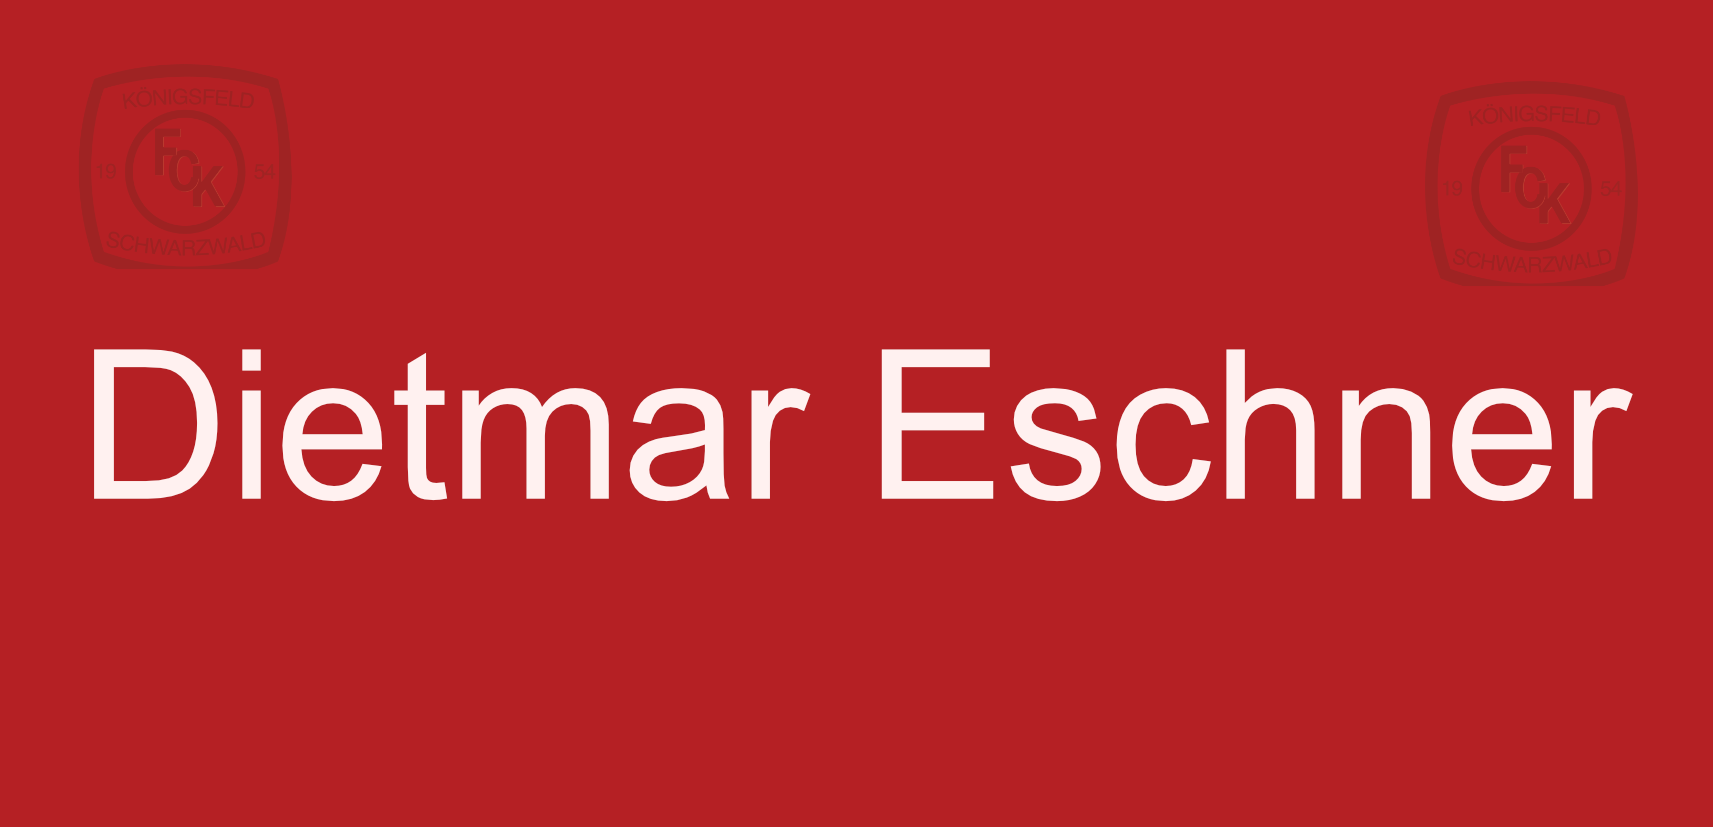 Dietmar Eschner